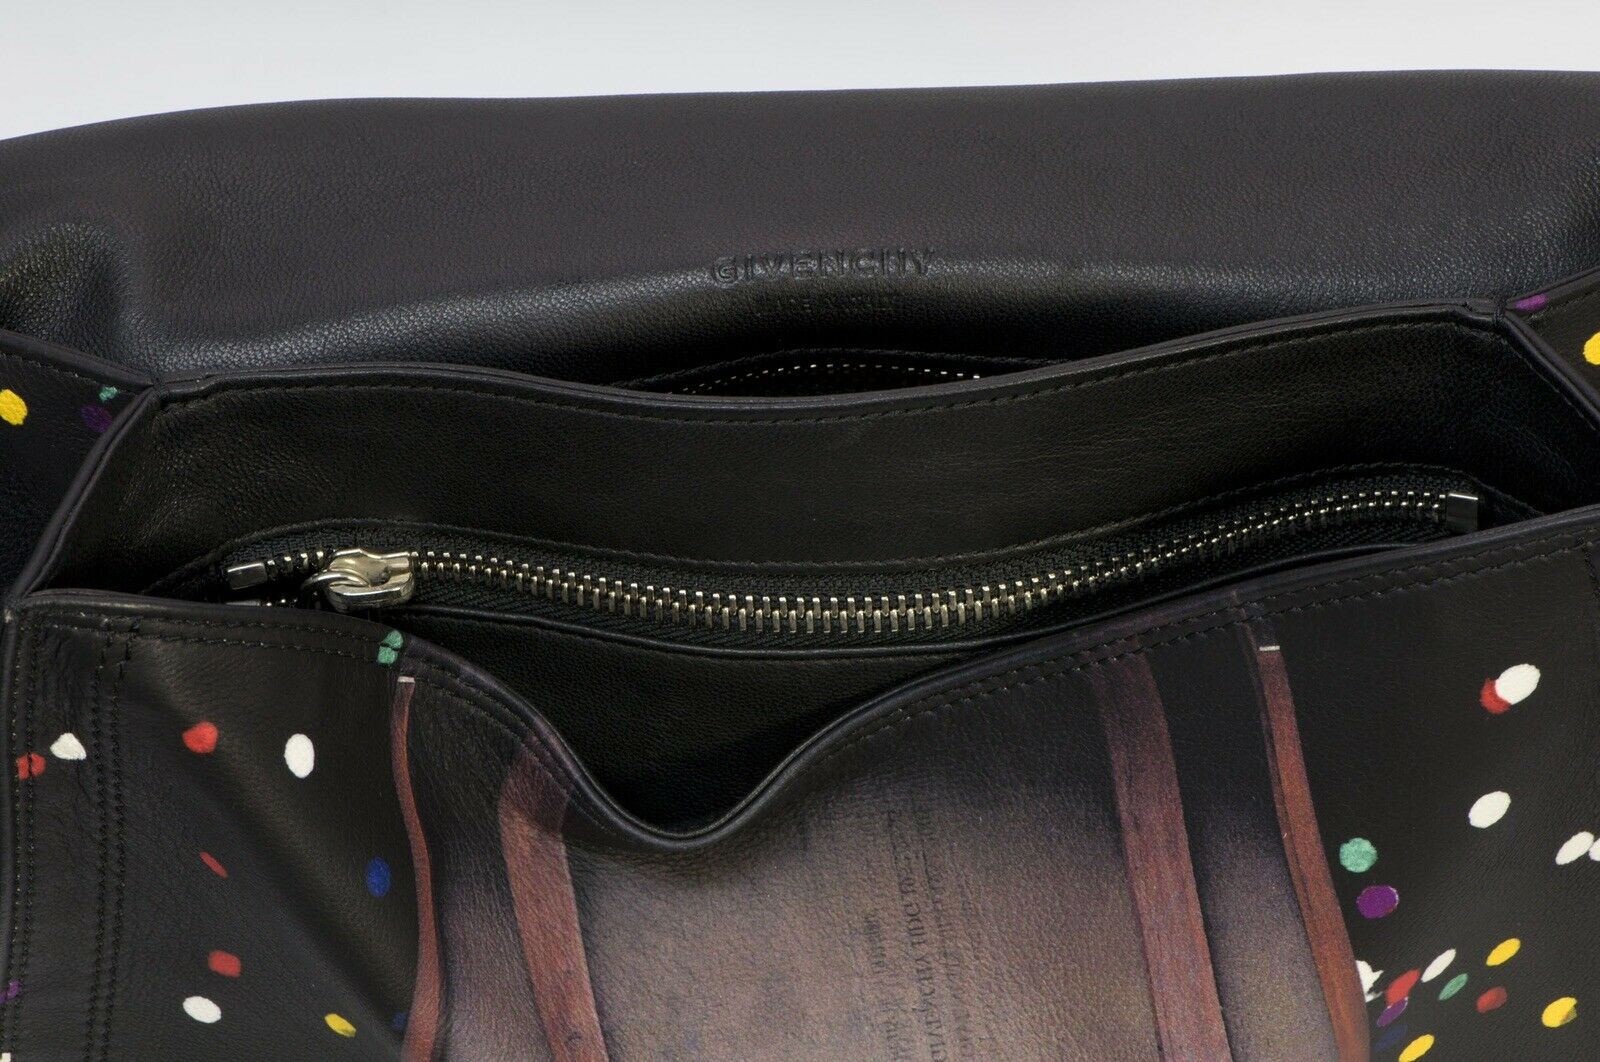 GIVENCHY Confetti Black Leather Women’s Flap Clutch Bag